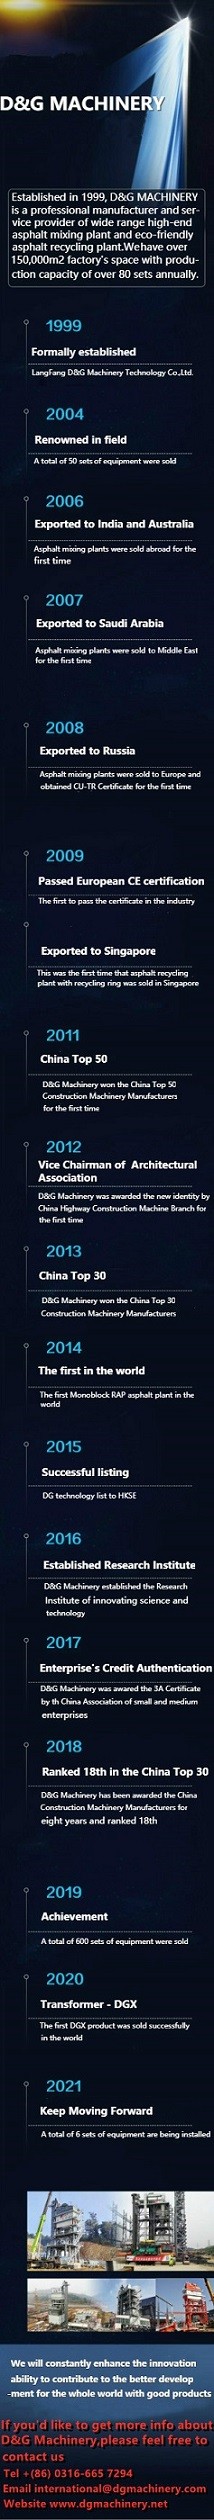 История развития D&G Machinery